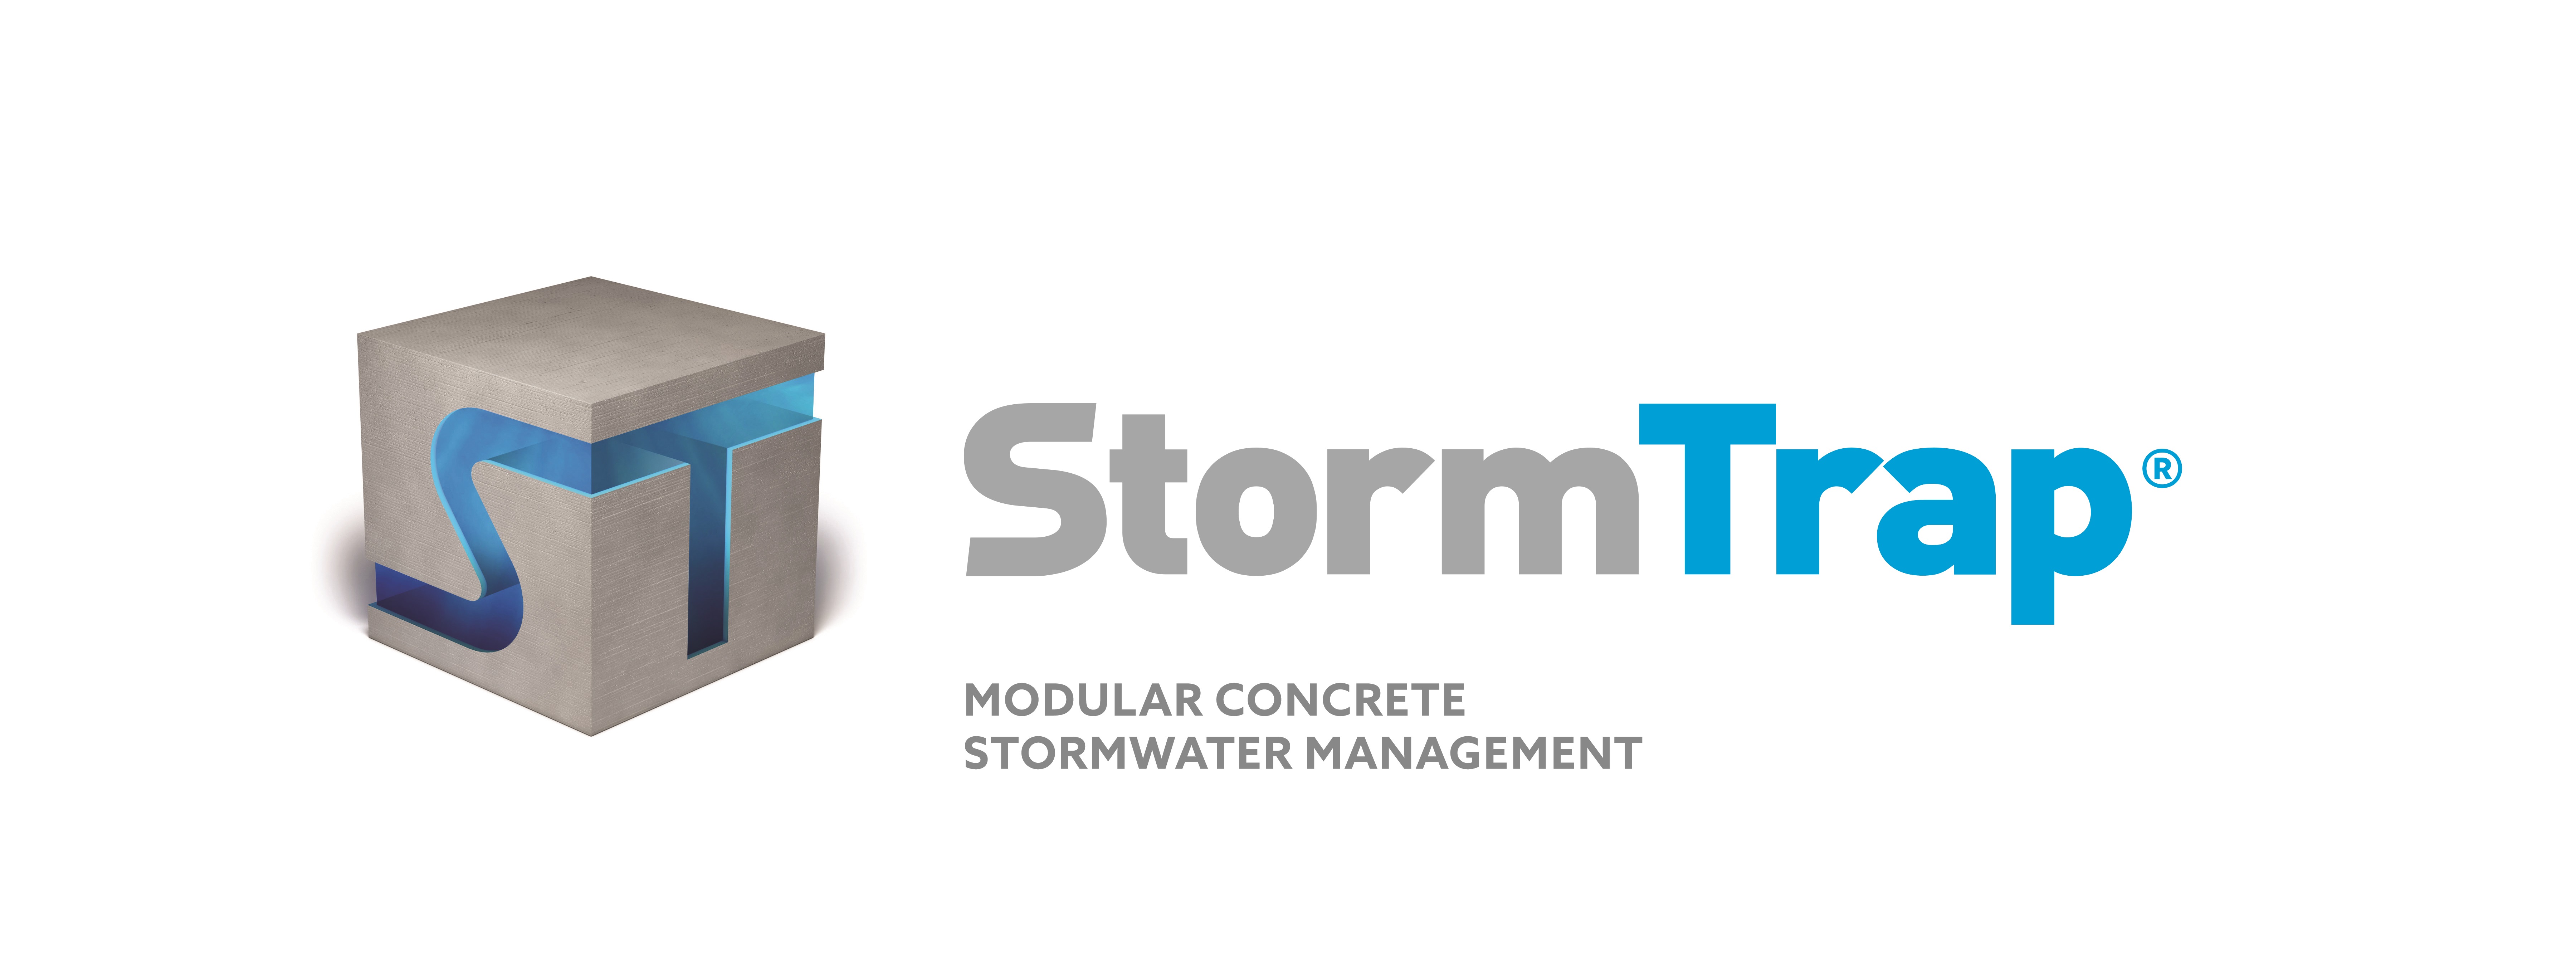 StormTrap logo